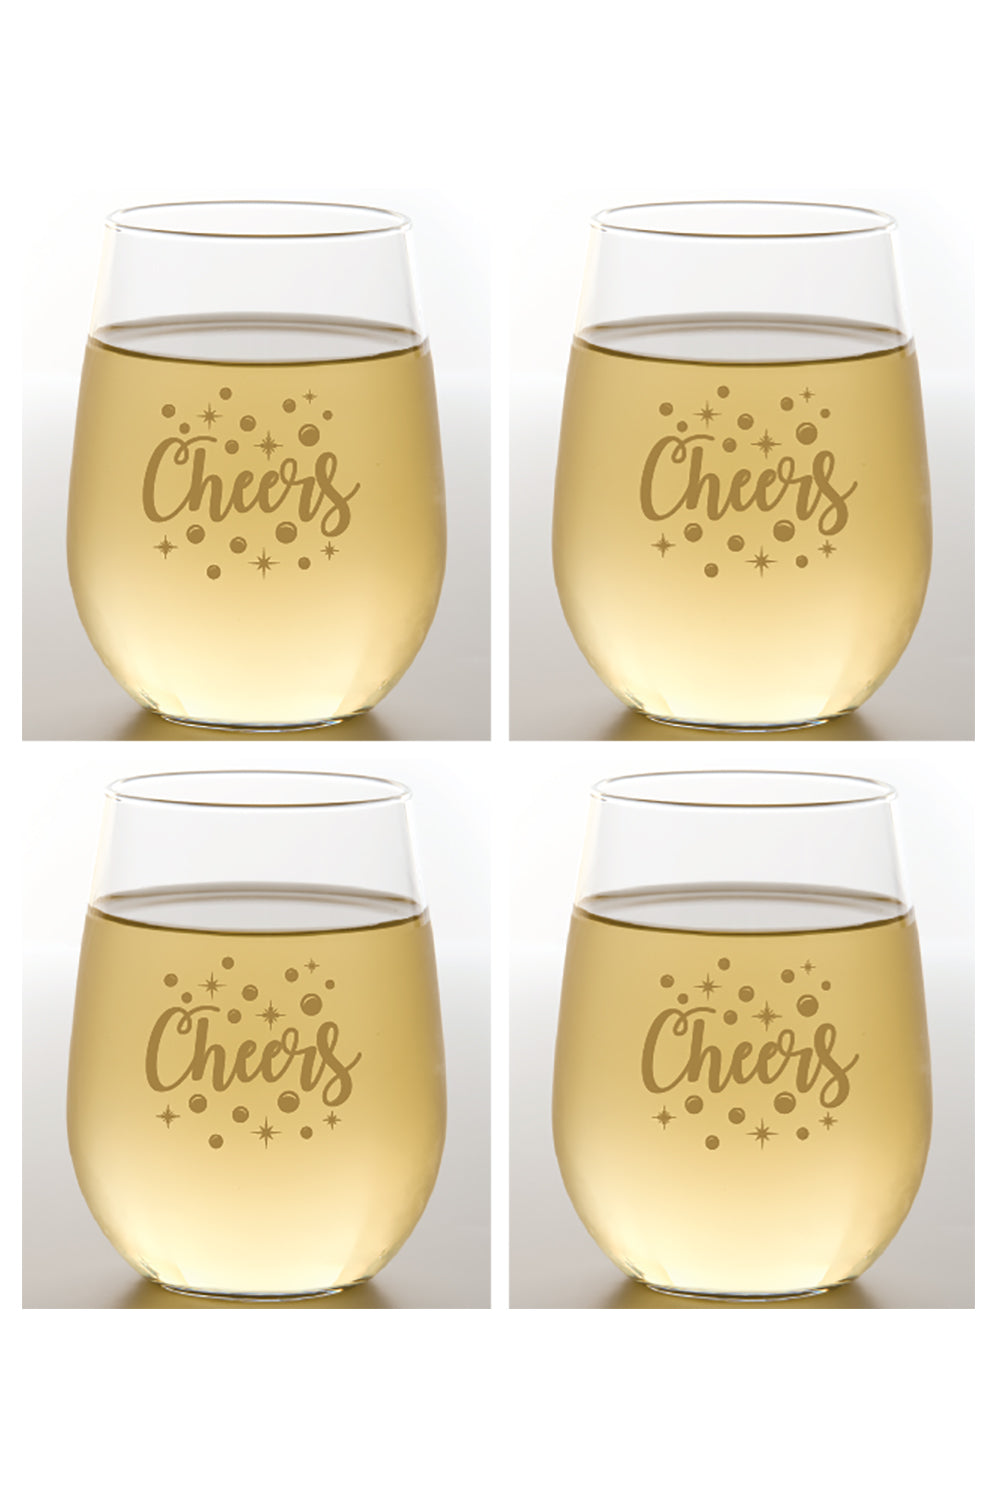 Cheers Gold Shatterproof Designer Wine Glasses - 4 Pack